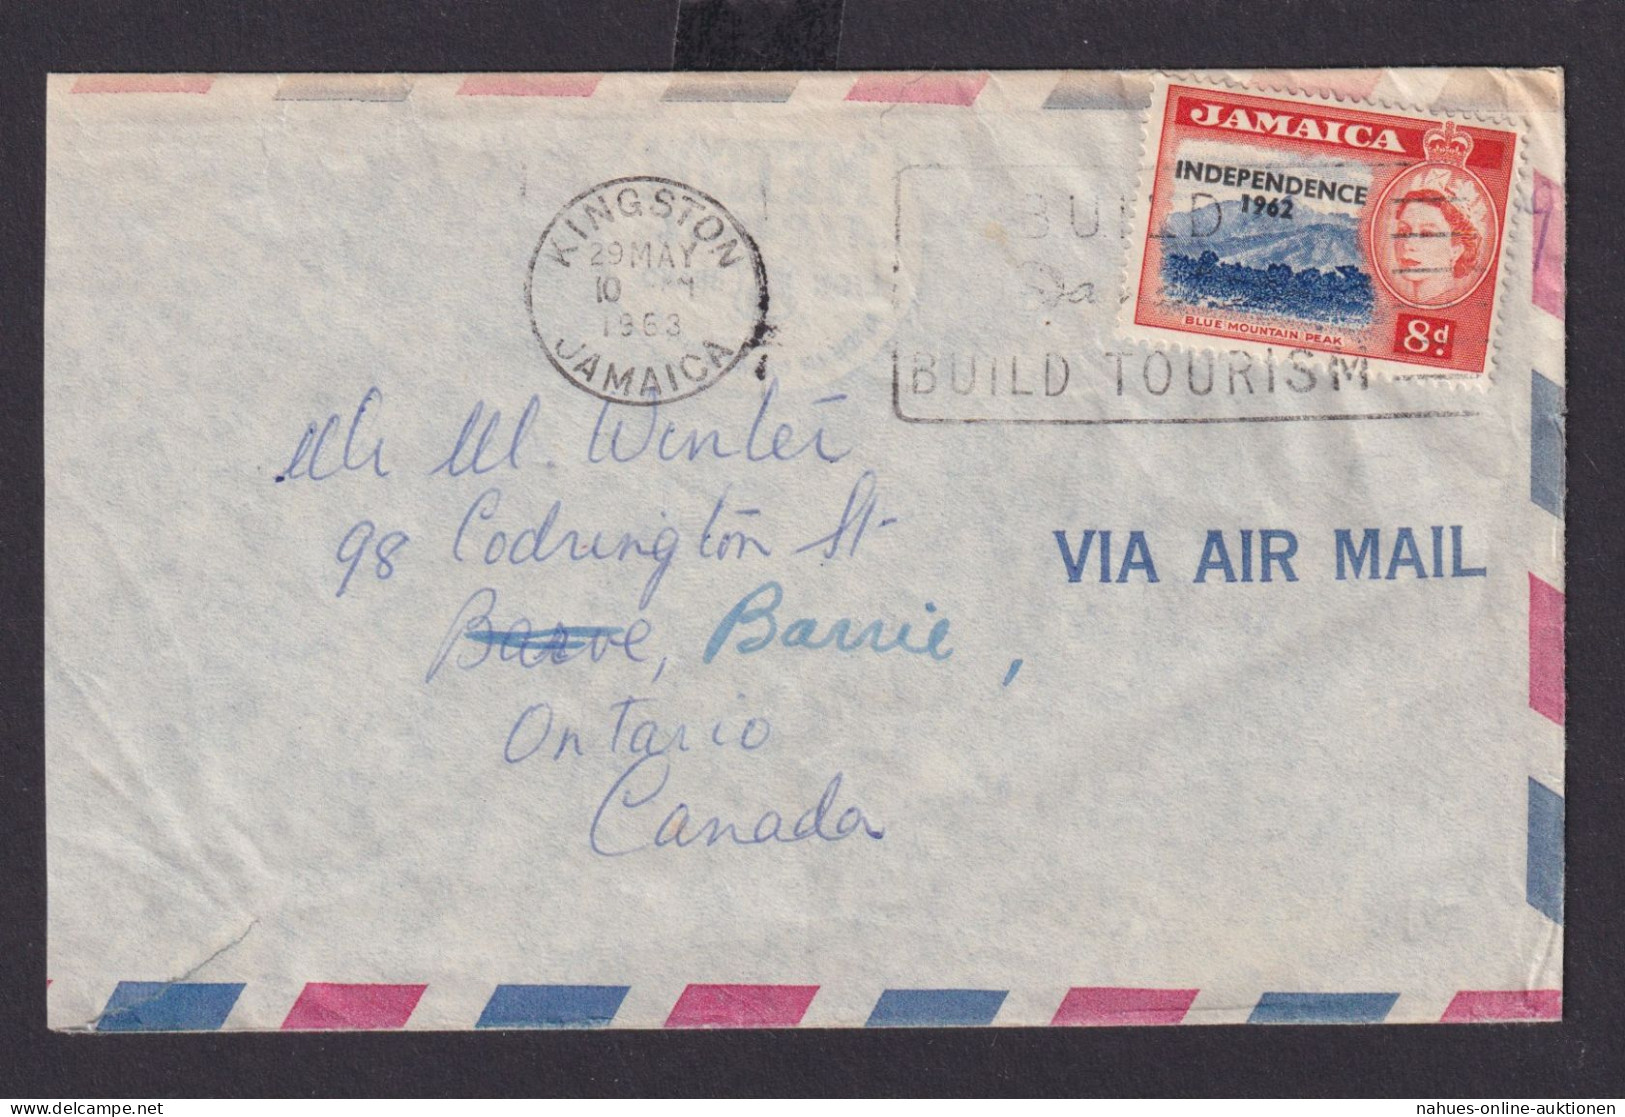 Jamaika Brief EF Queen Elisabeth 8d Masch.St. Kingston Build Tourism N. Ontario - Jamaique (1962-...)